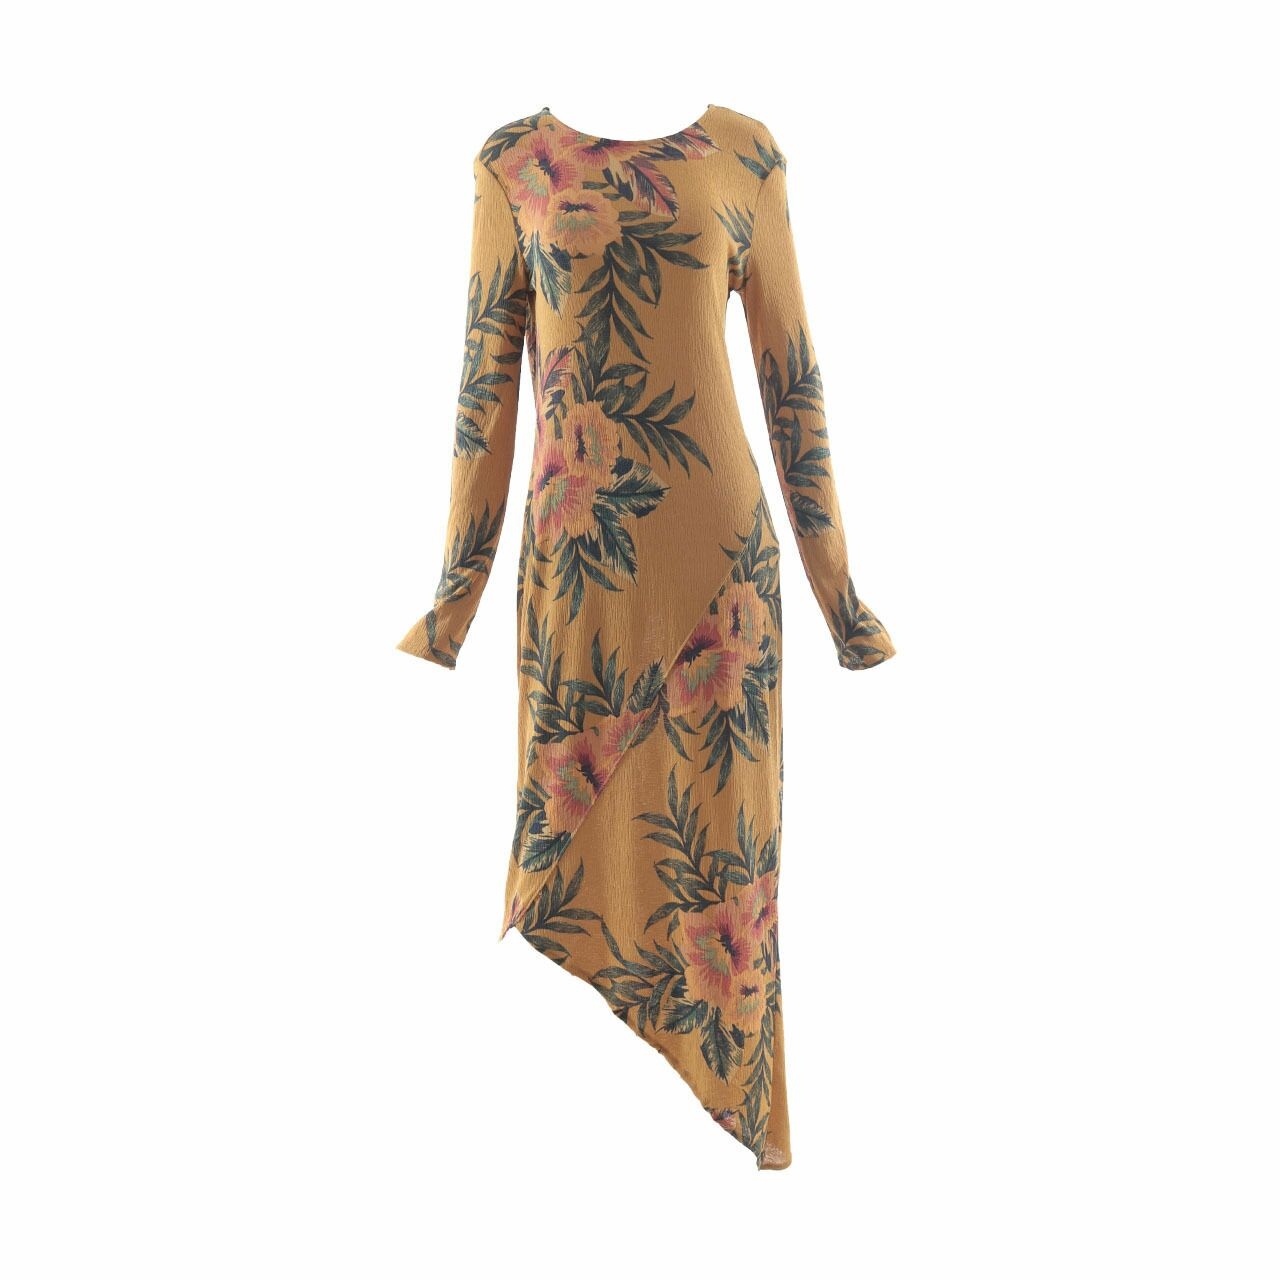 Zara Mustard Floral Long Dress